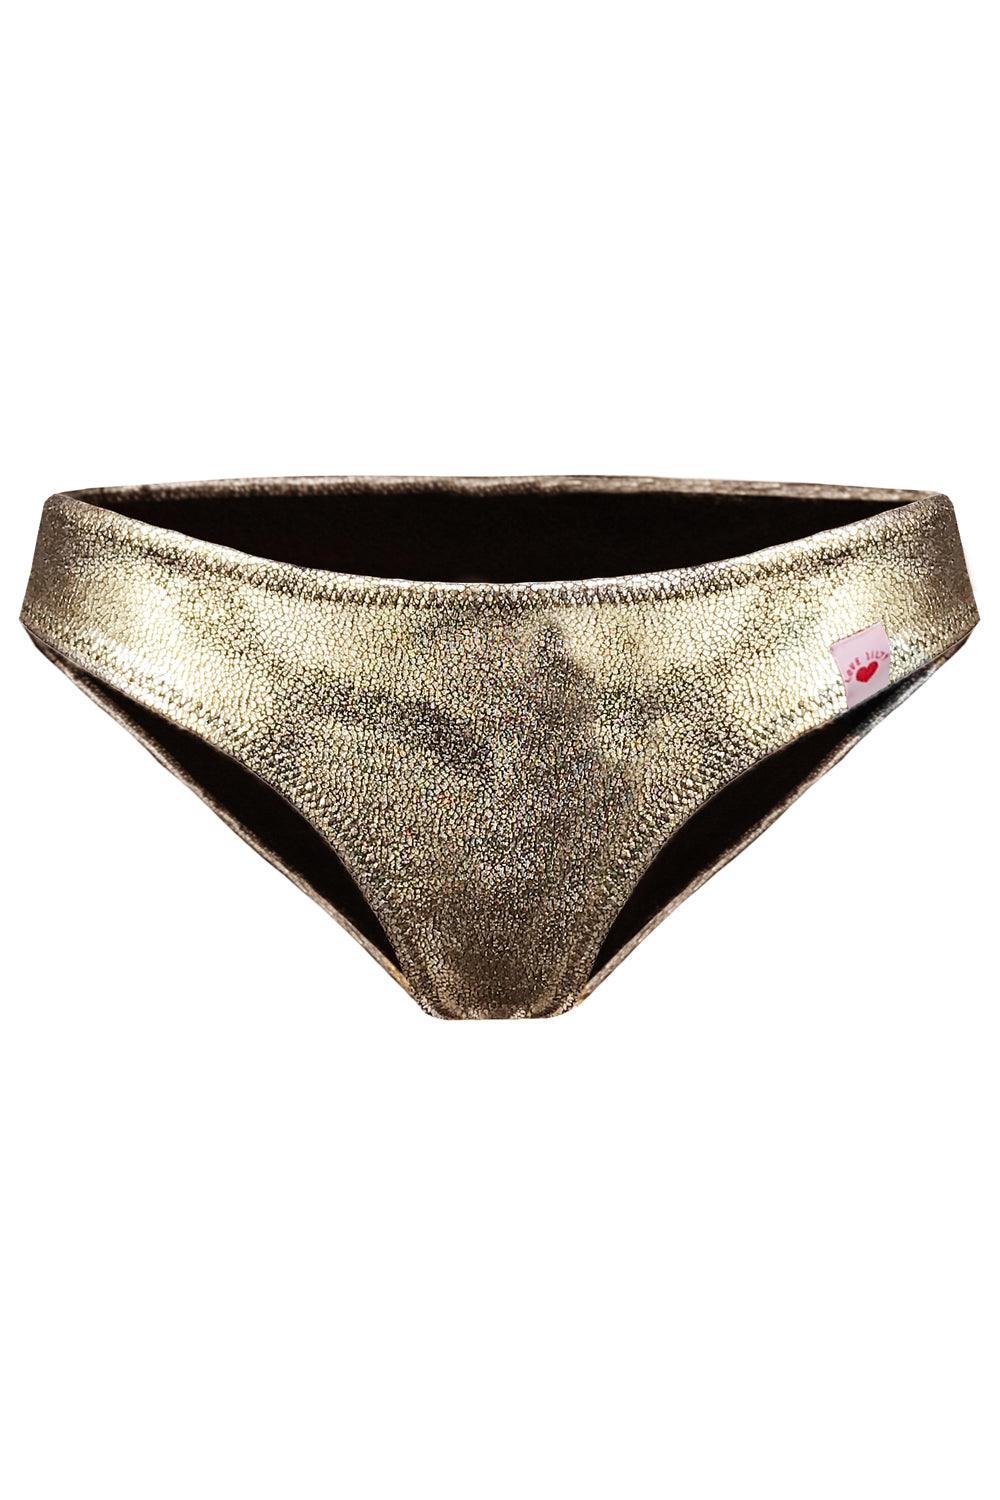 Amelia Gold bikini bottom - Bikini bottom by Love Jilty. Shop on yesUndress